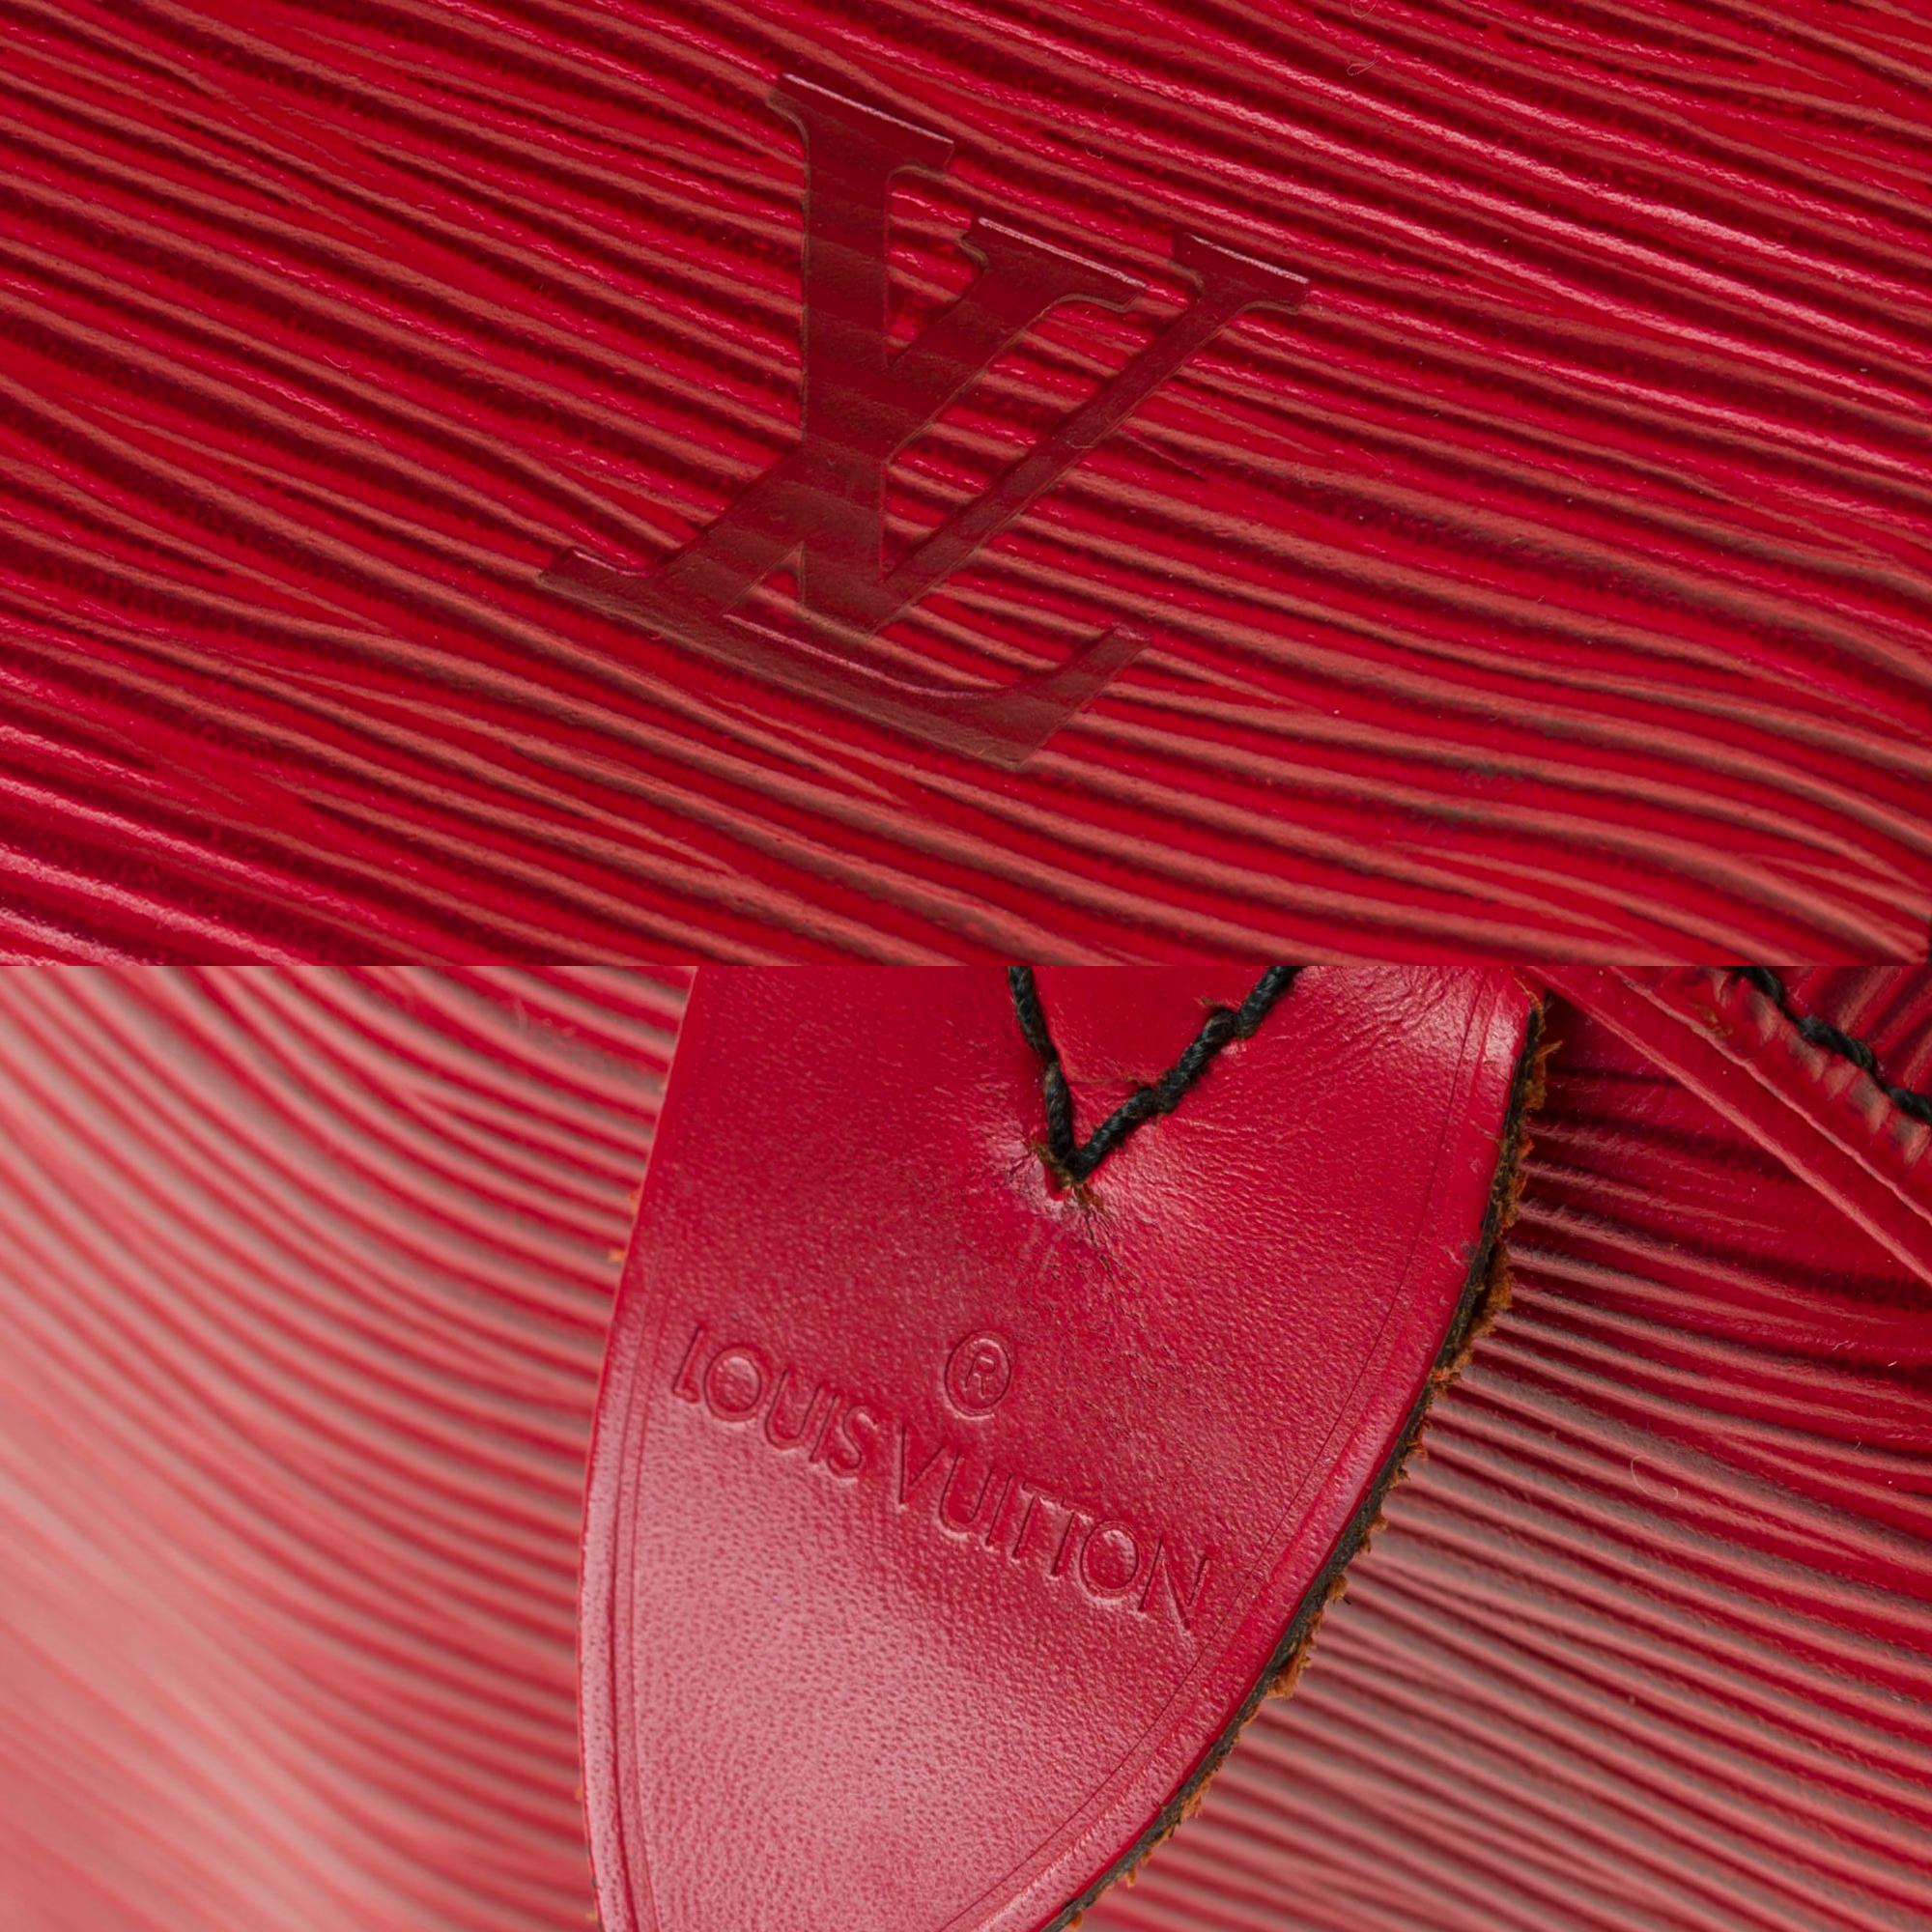 Women's Louis Vuitton Speedy 35 handbag in red épi leather